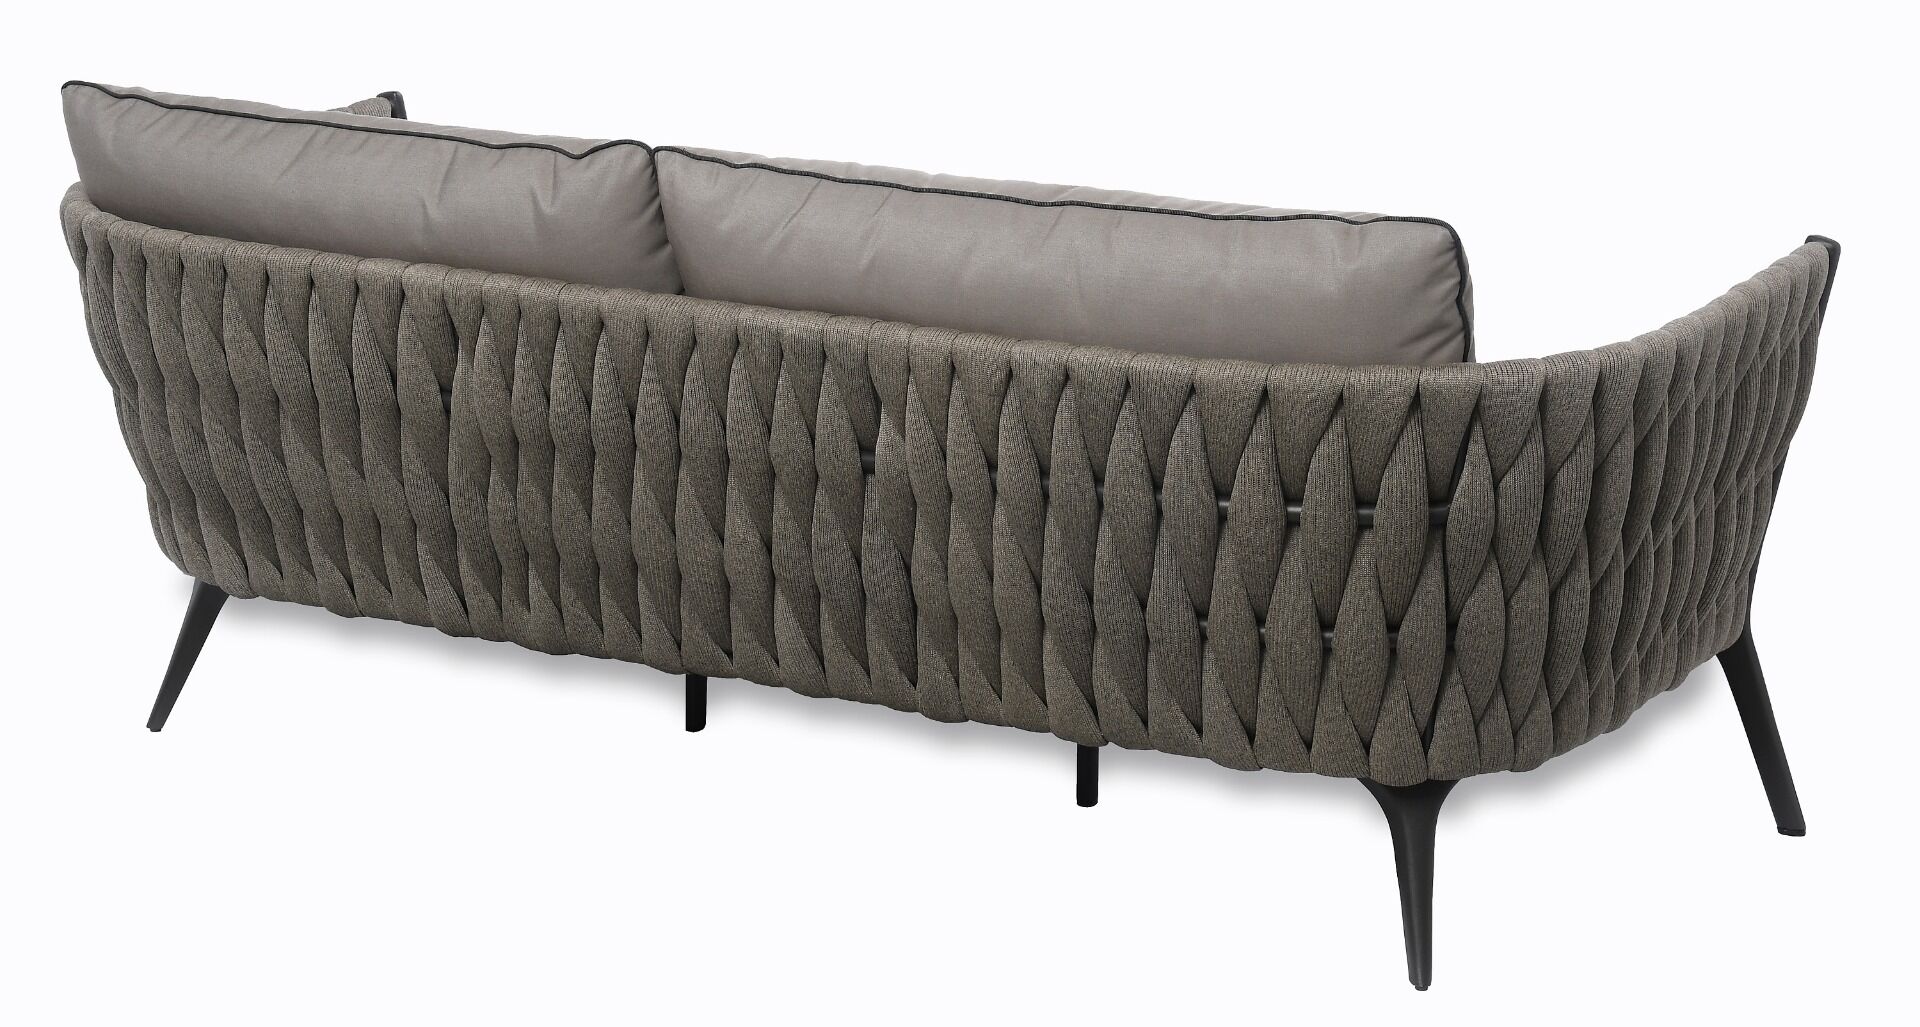 Sofa 2 osobowa Kampala 190x82x65 cm